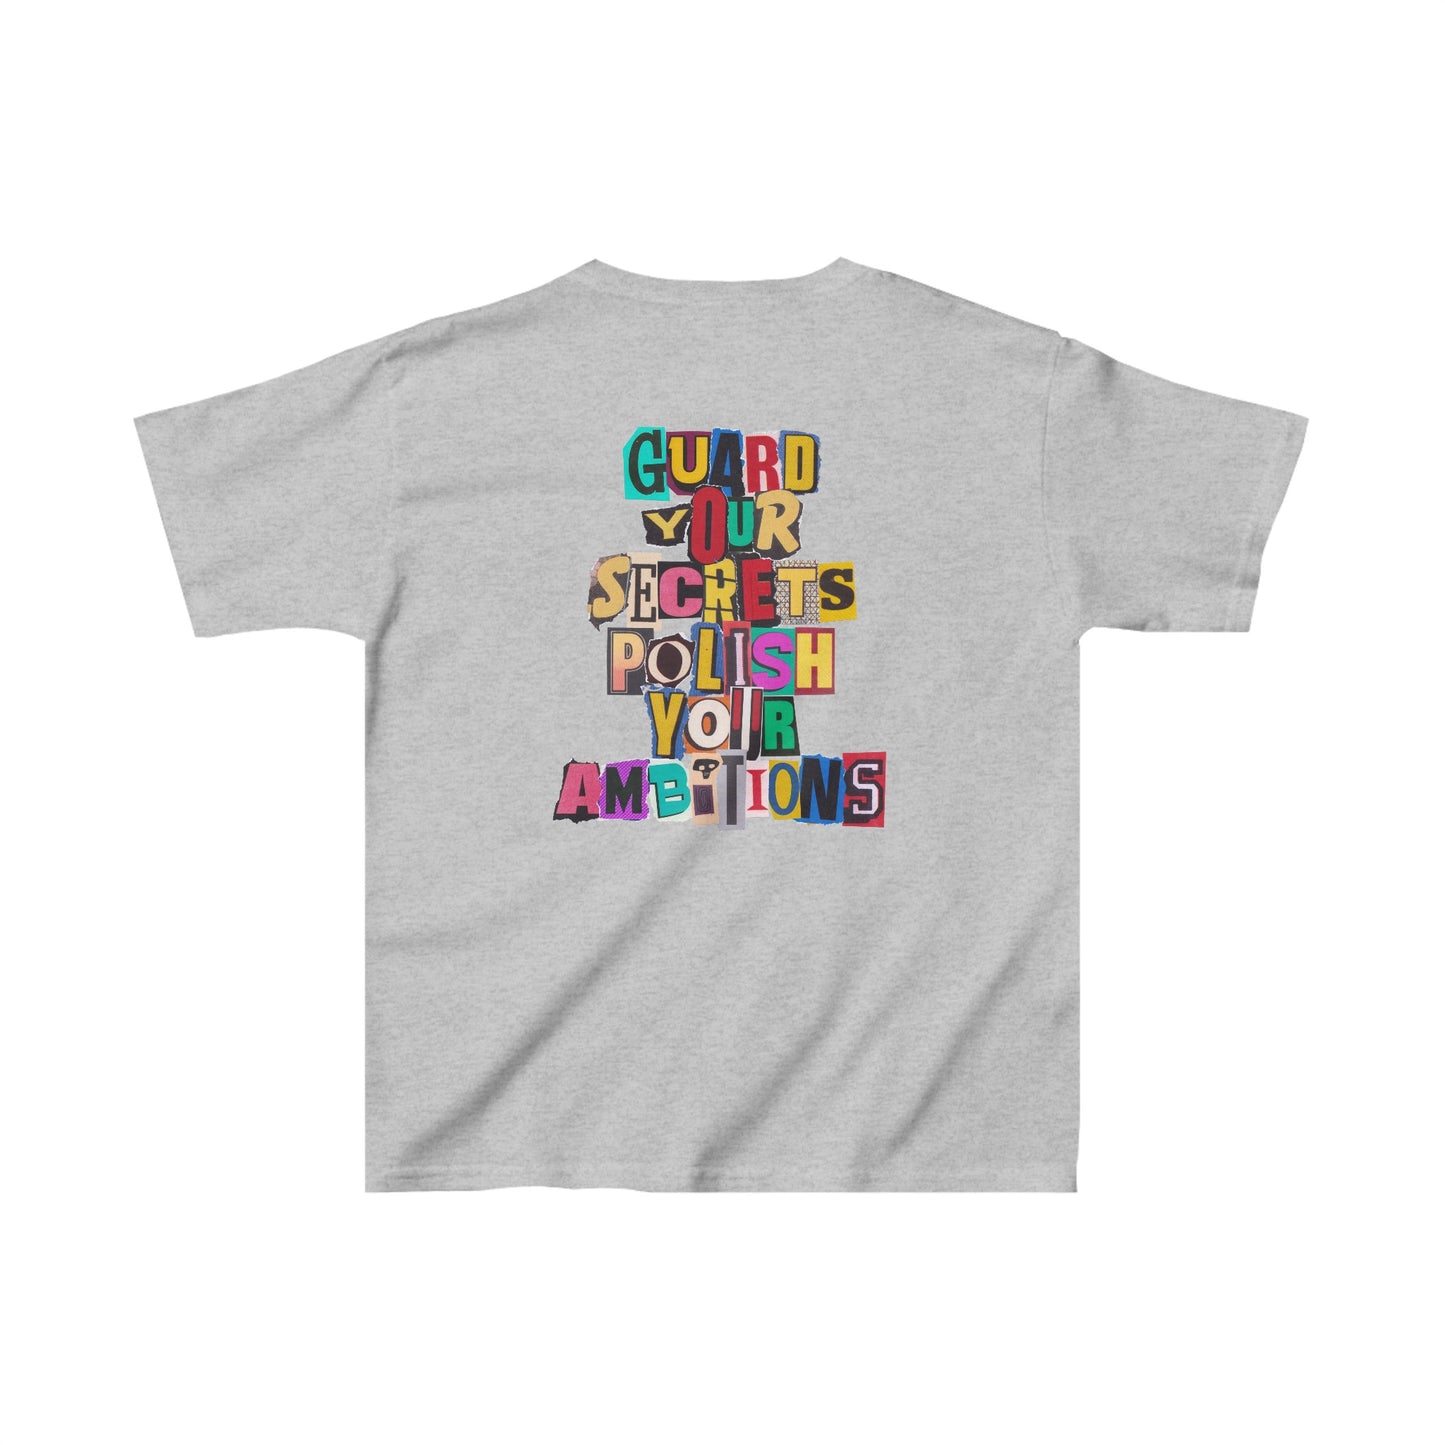 Youth WIY x Triple JJJ Vintage T-Shirt